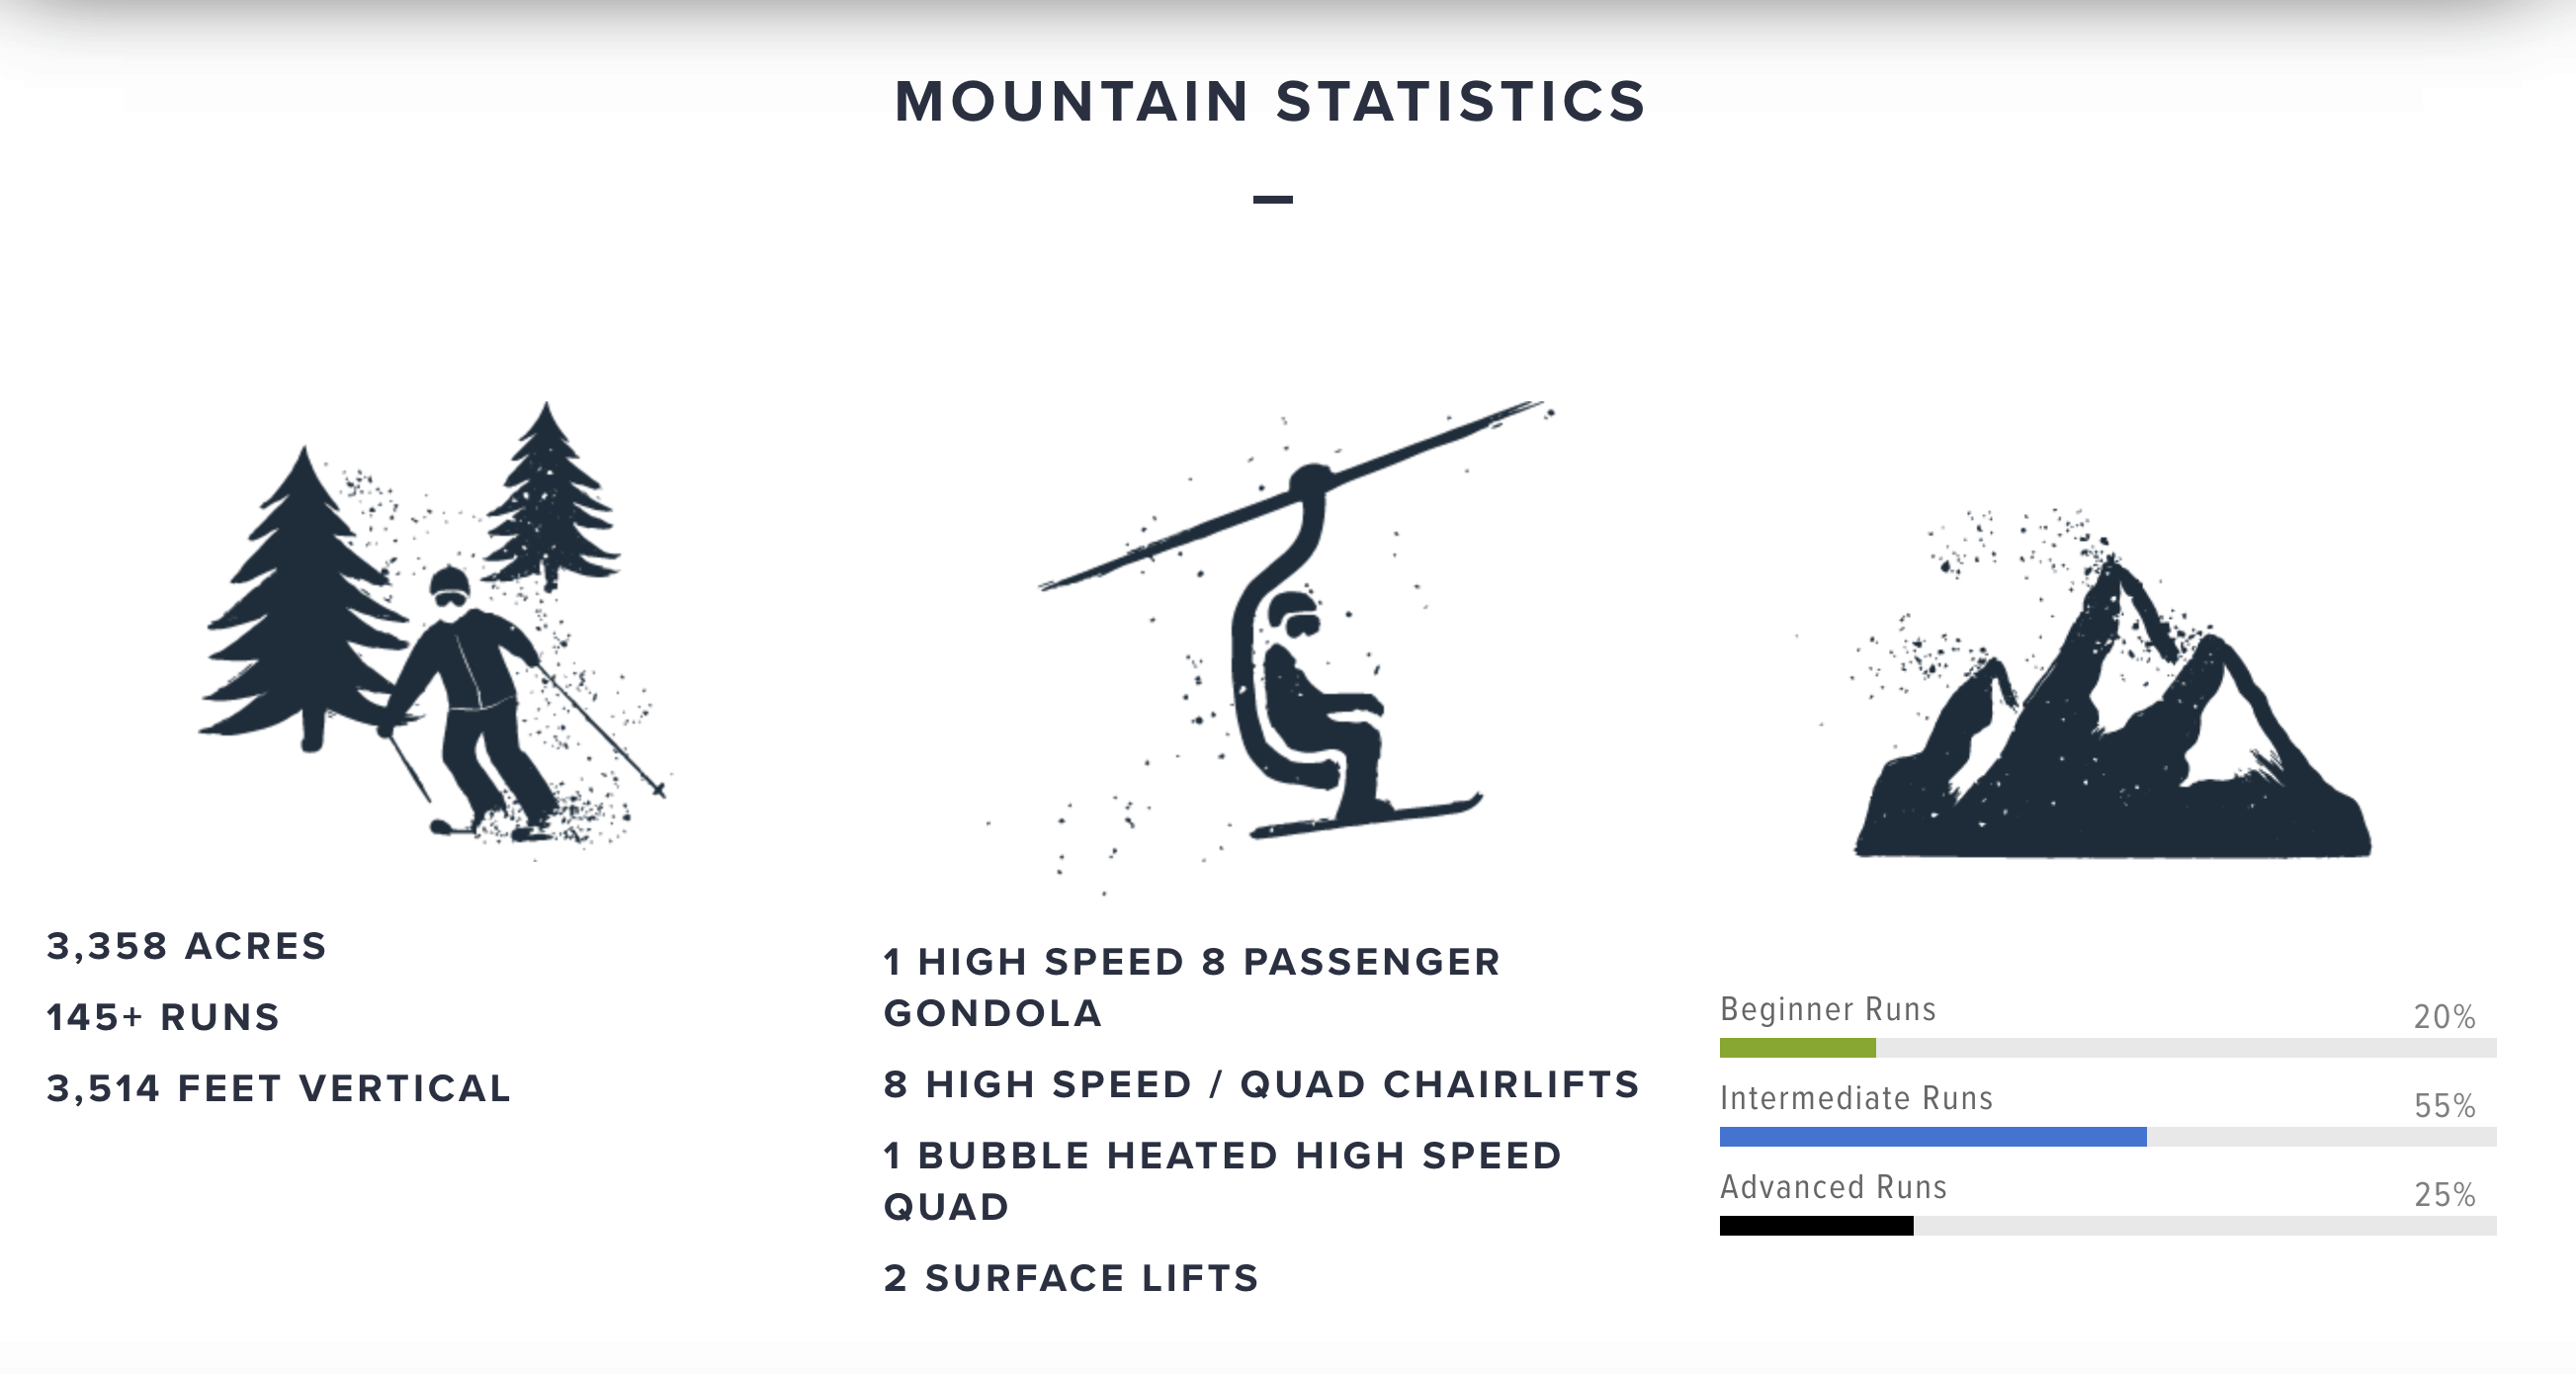 Mountain statistics of Sunshine Ski Resort in Banff 